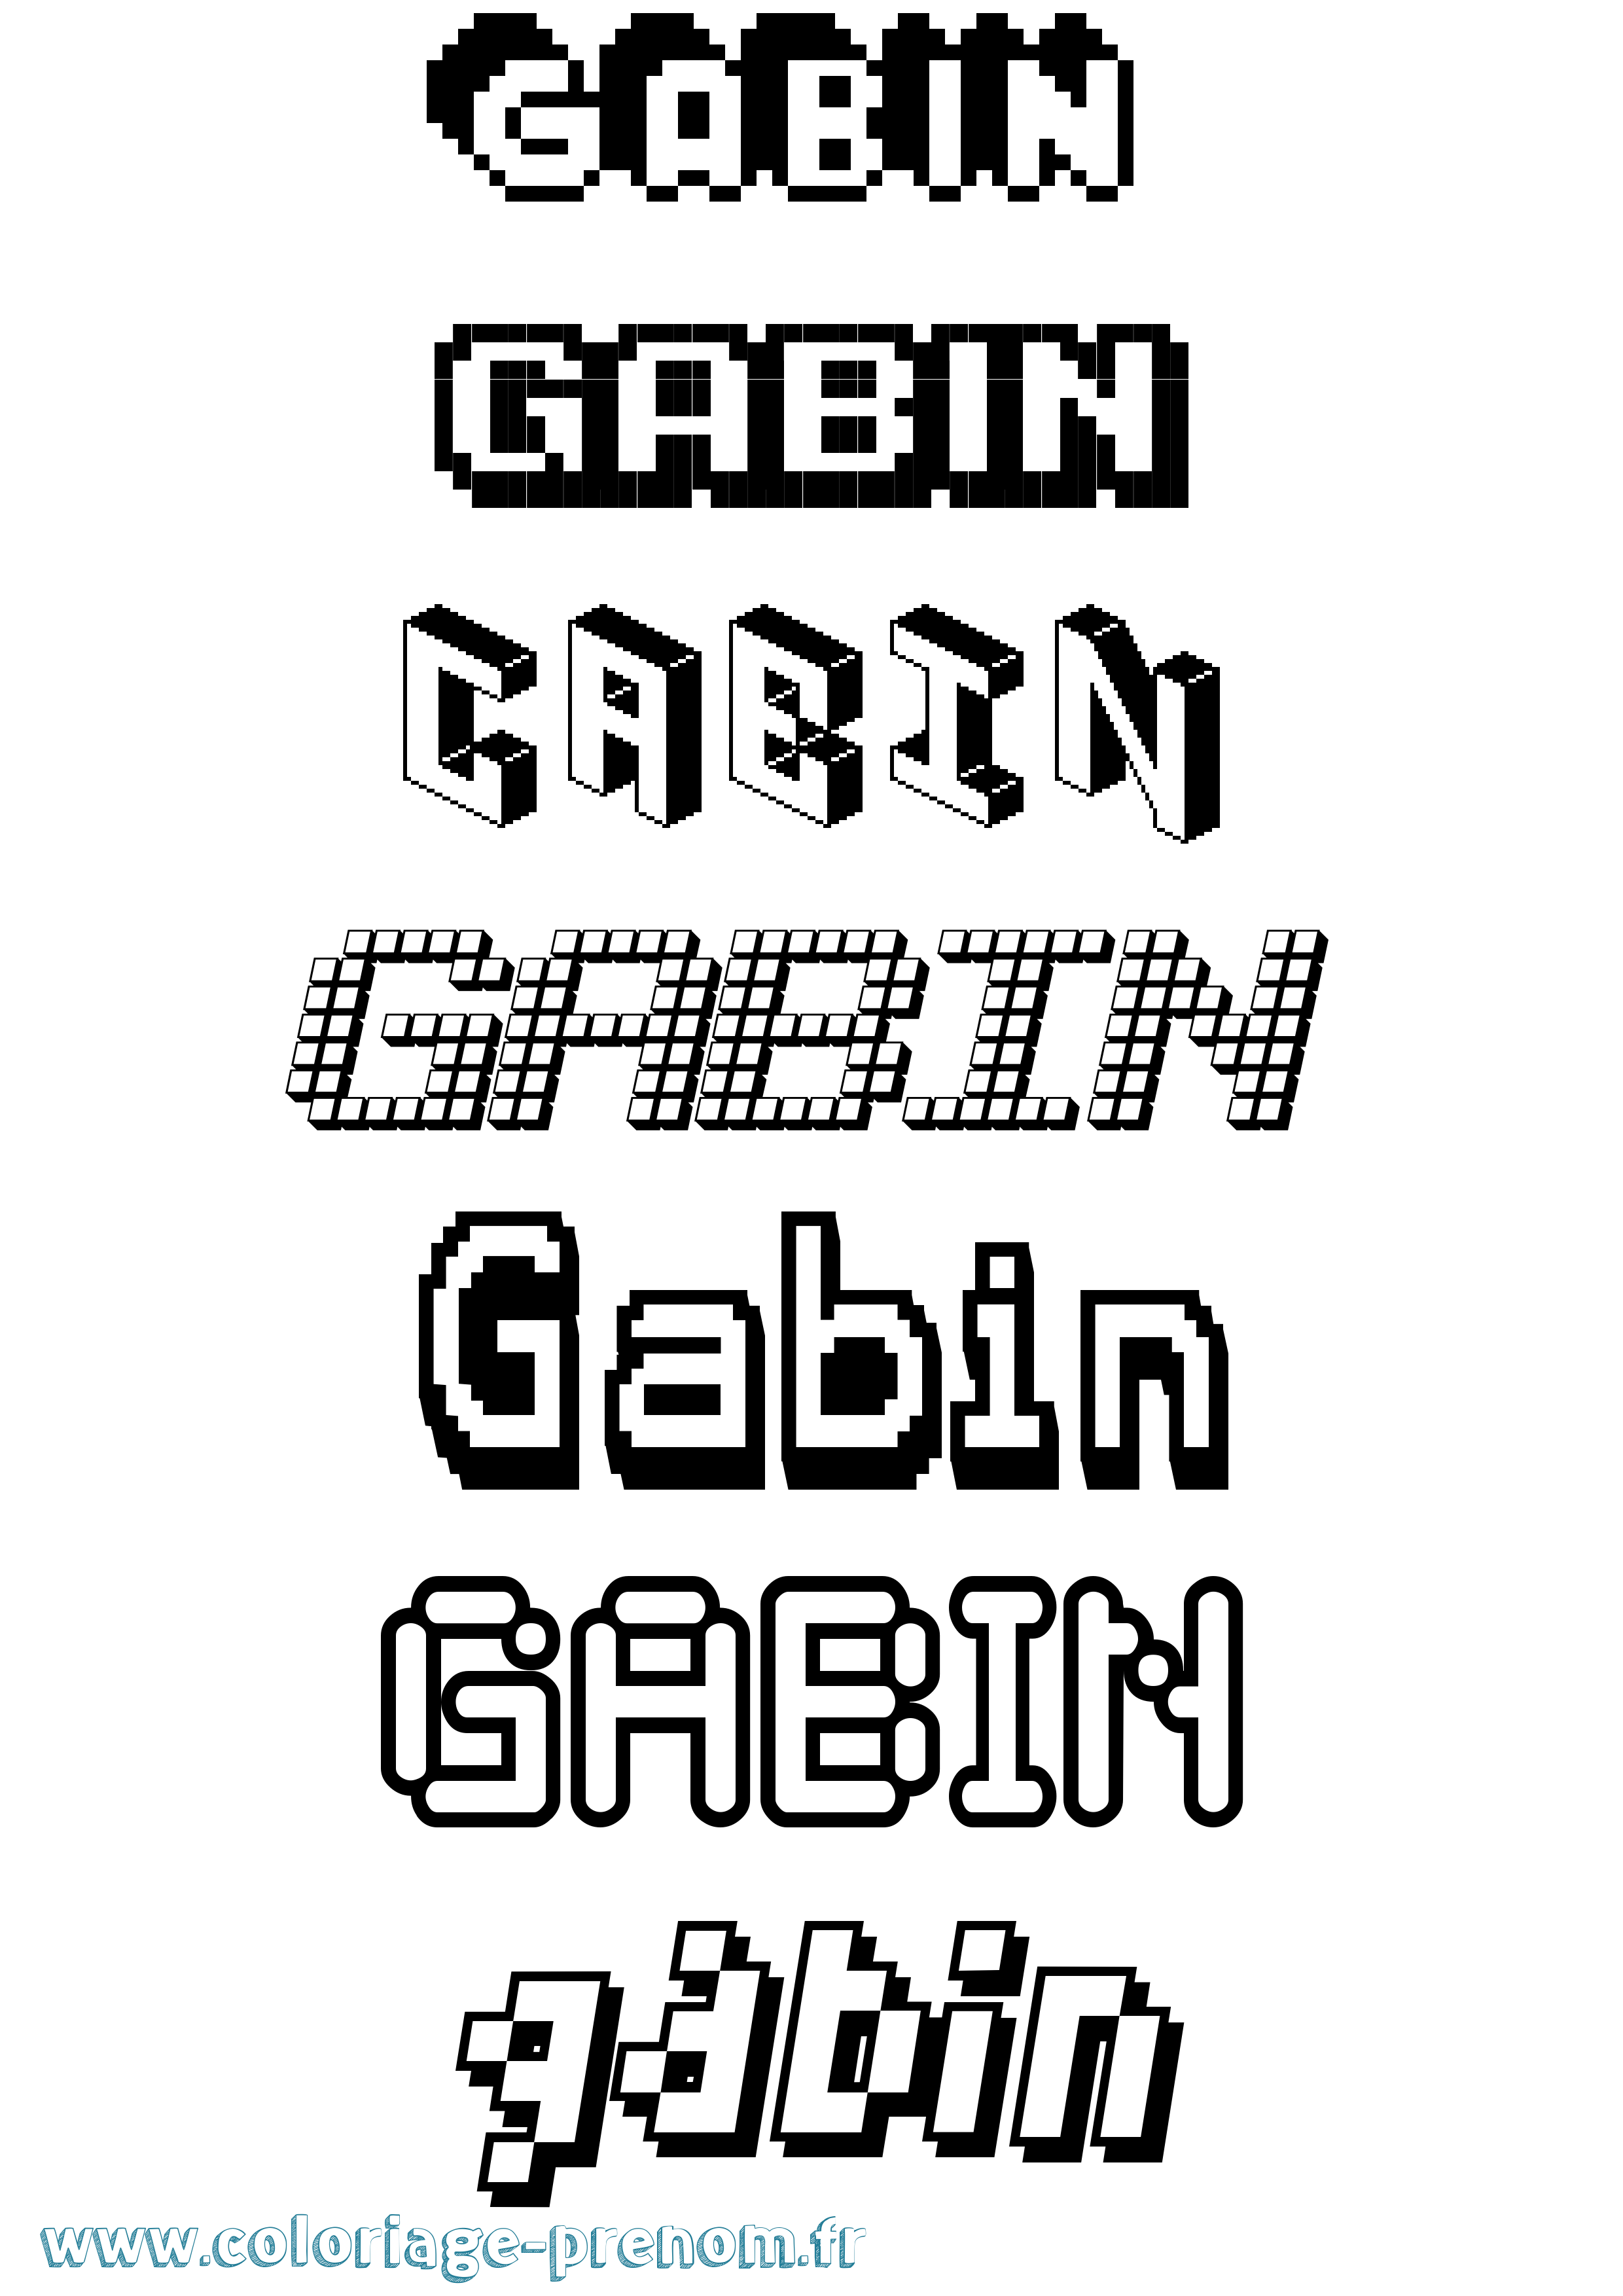 Coloriage prénom Gabin Pixel